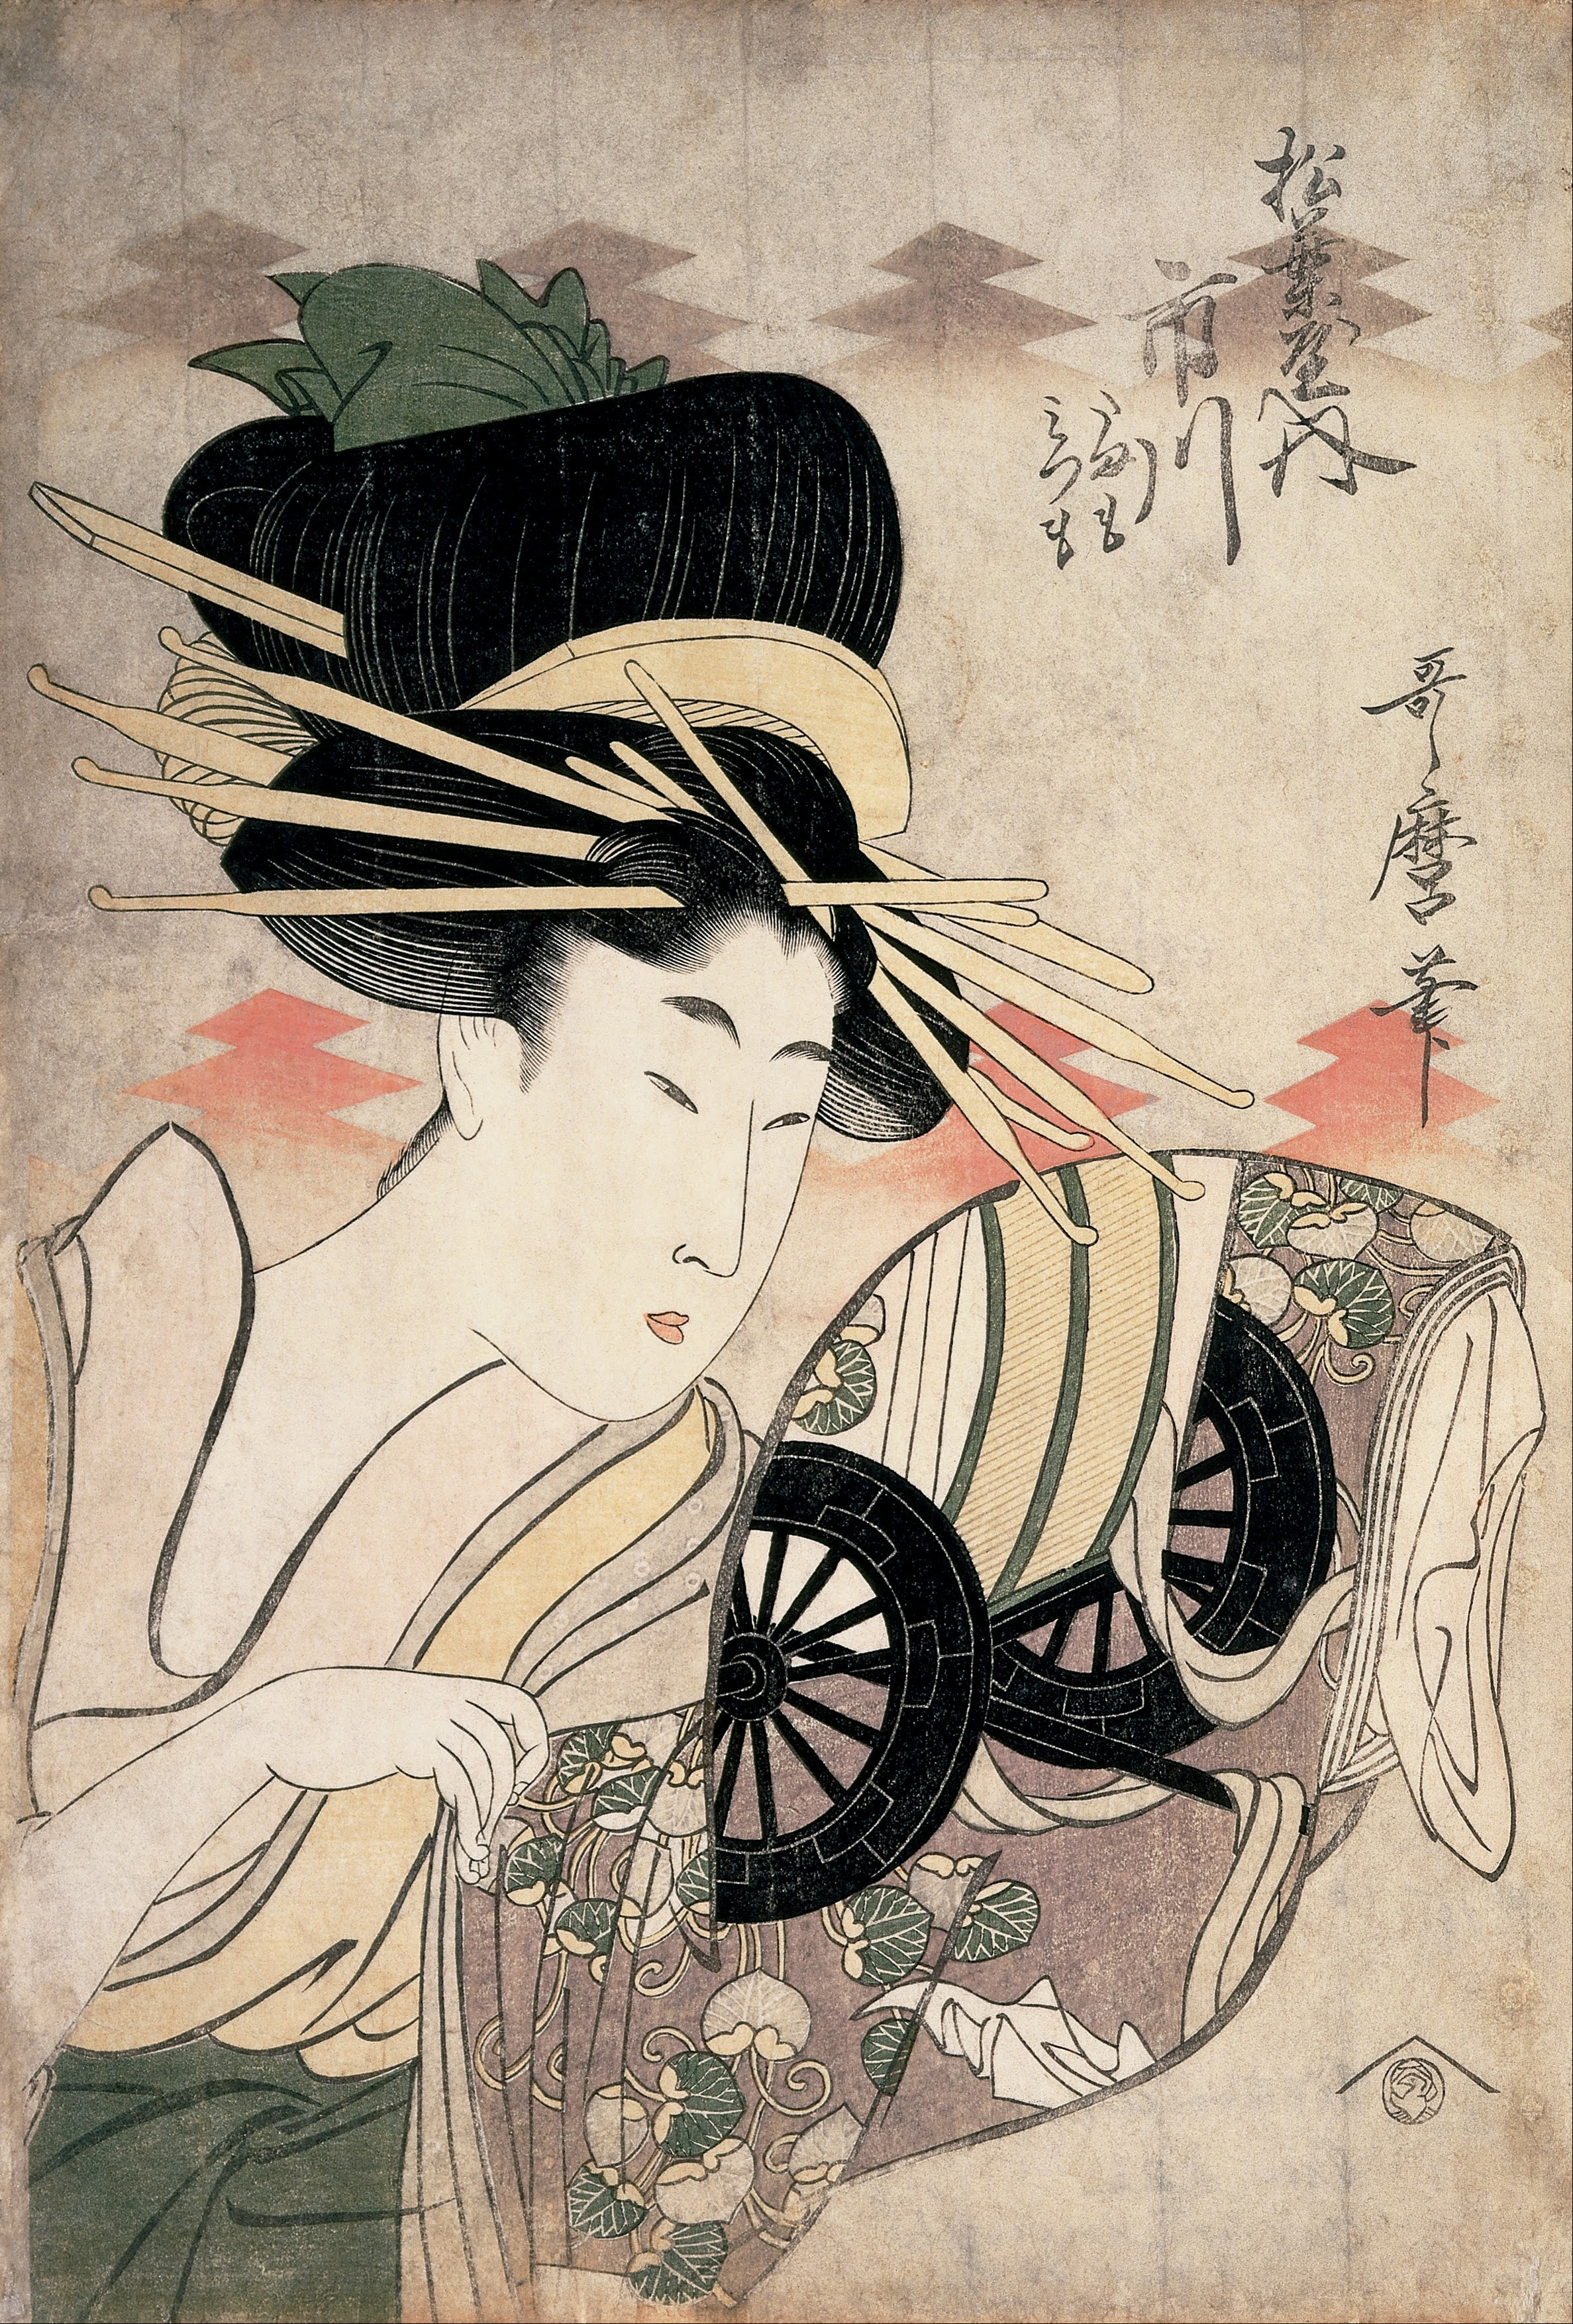 Куртизанка Итикава из заведения Мацуба by Kitagawa Utamaro - 1790 года - 37,9 x 25,4 см 